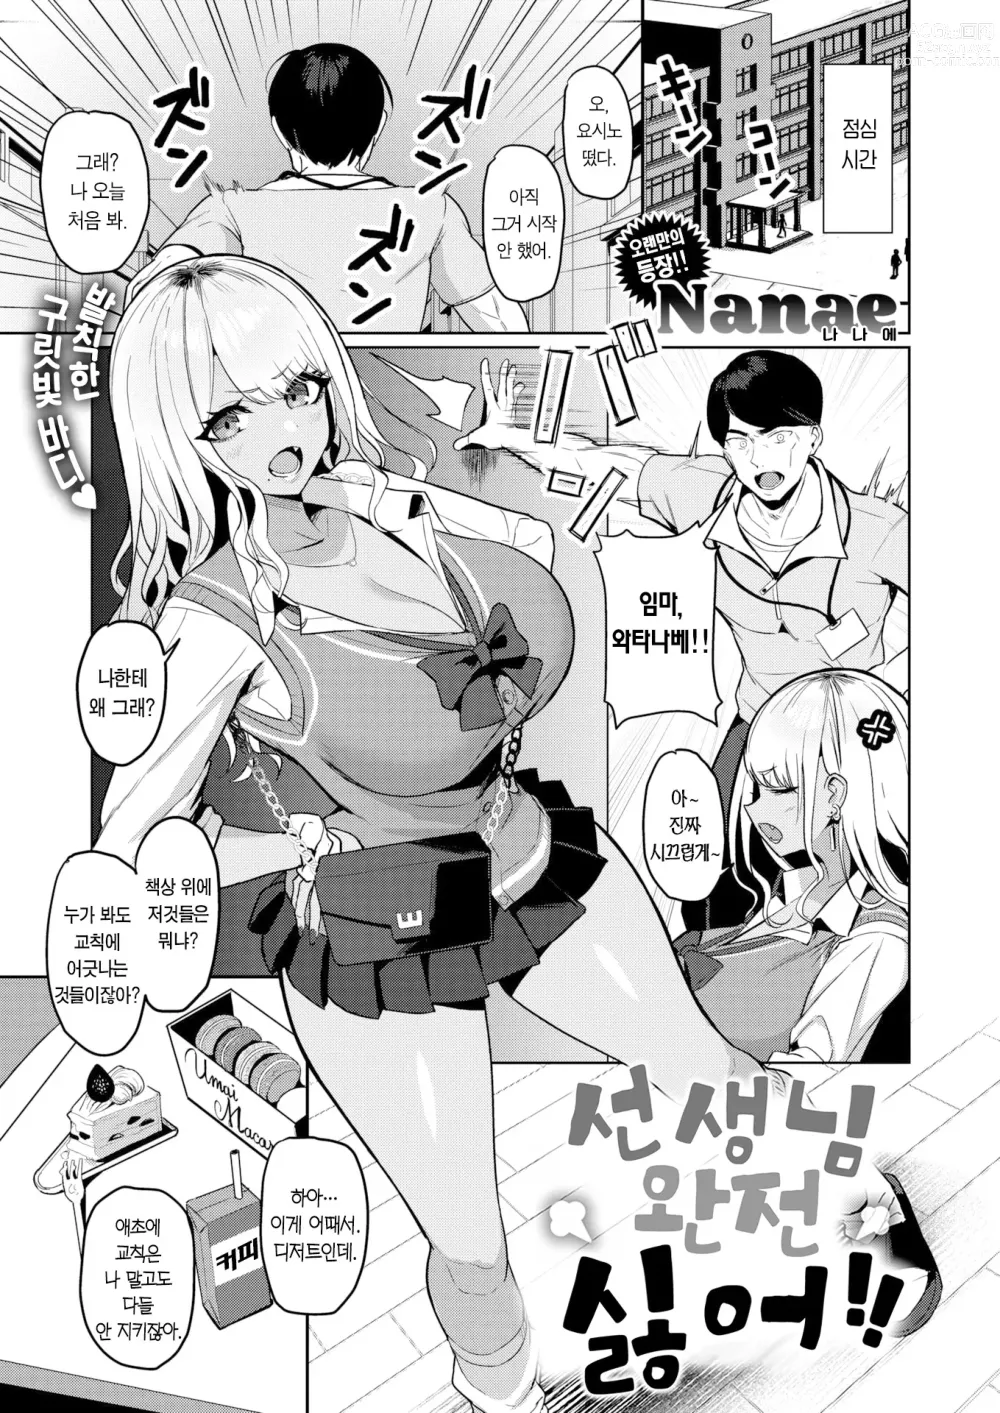 Page 2 of manga 선생님 완전 싫어!!